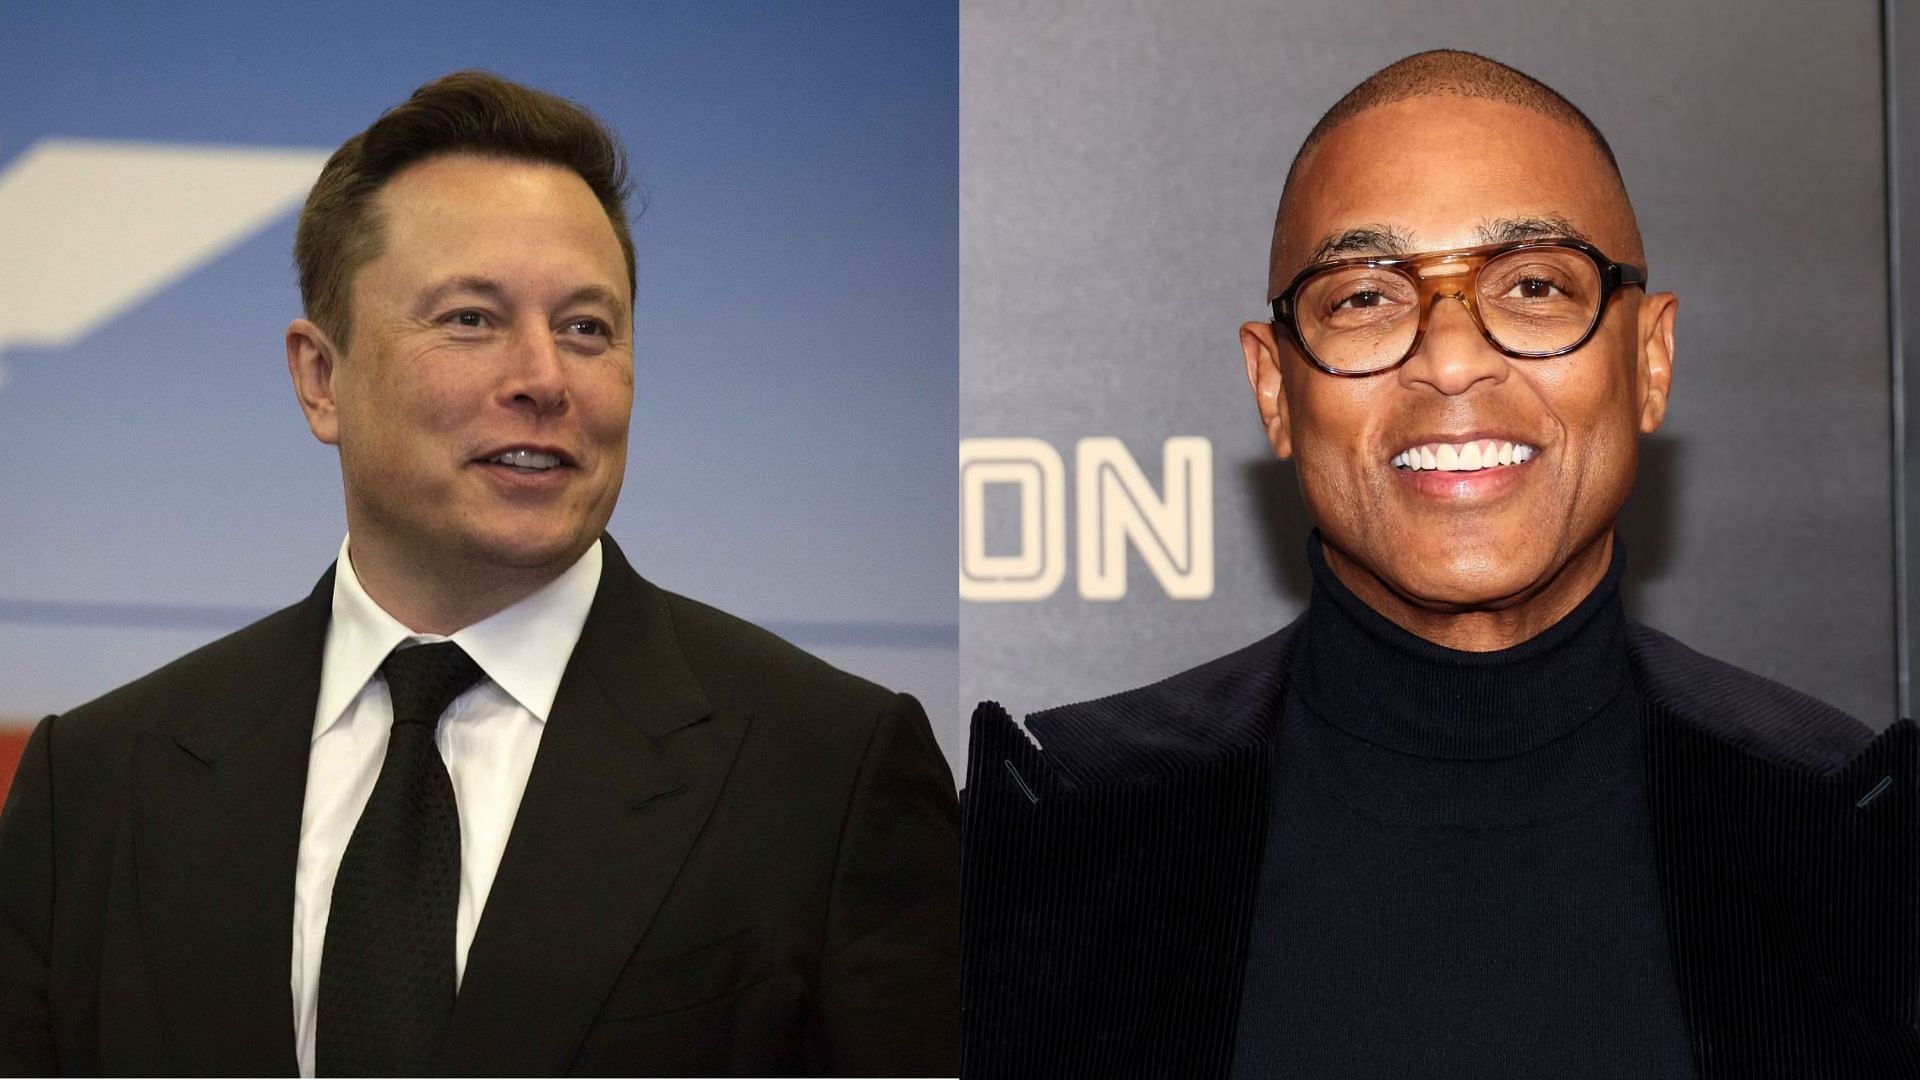 X CEO Elon Musk recently took a jab at Don Lemon (Image via Getty)